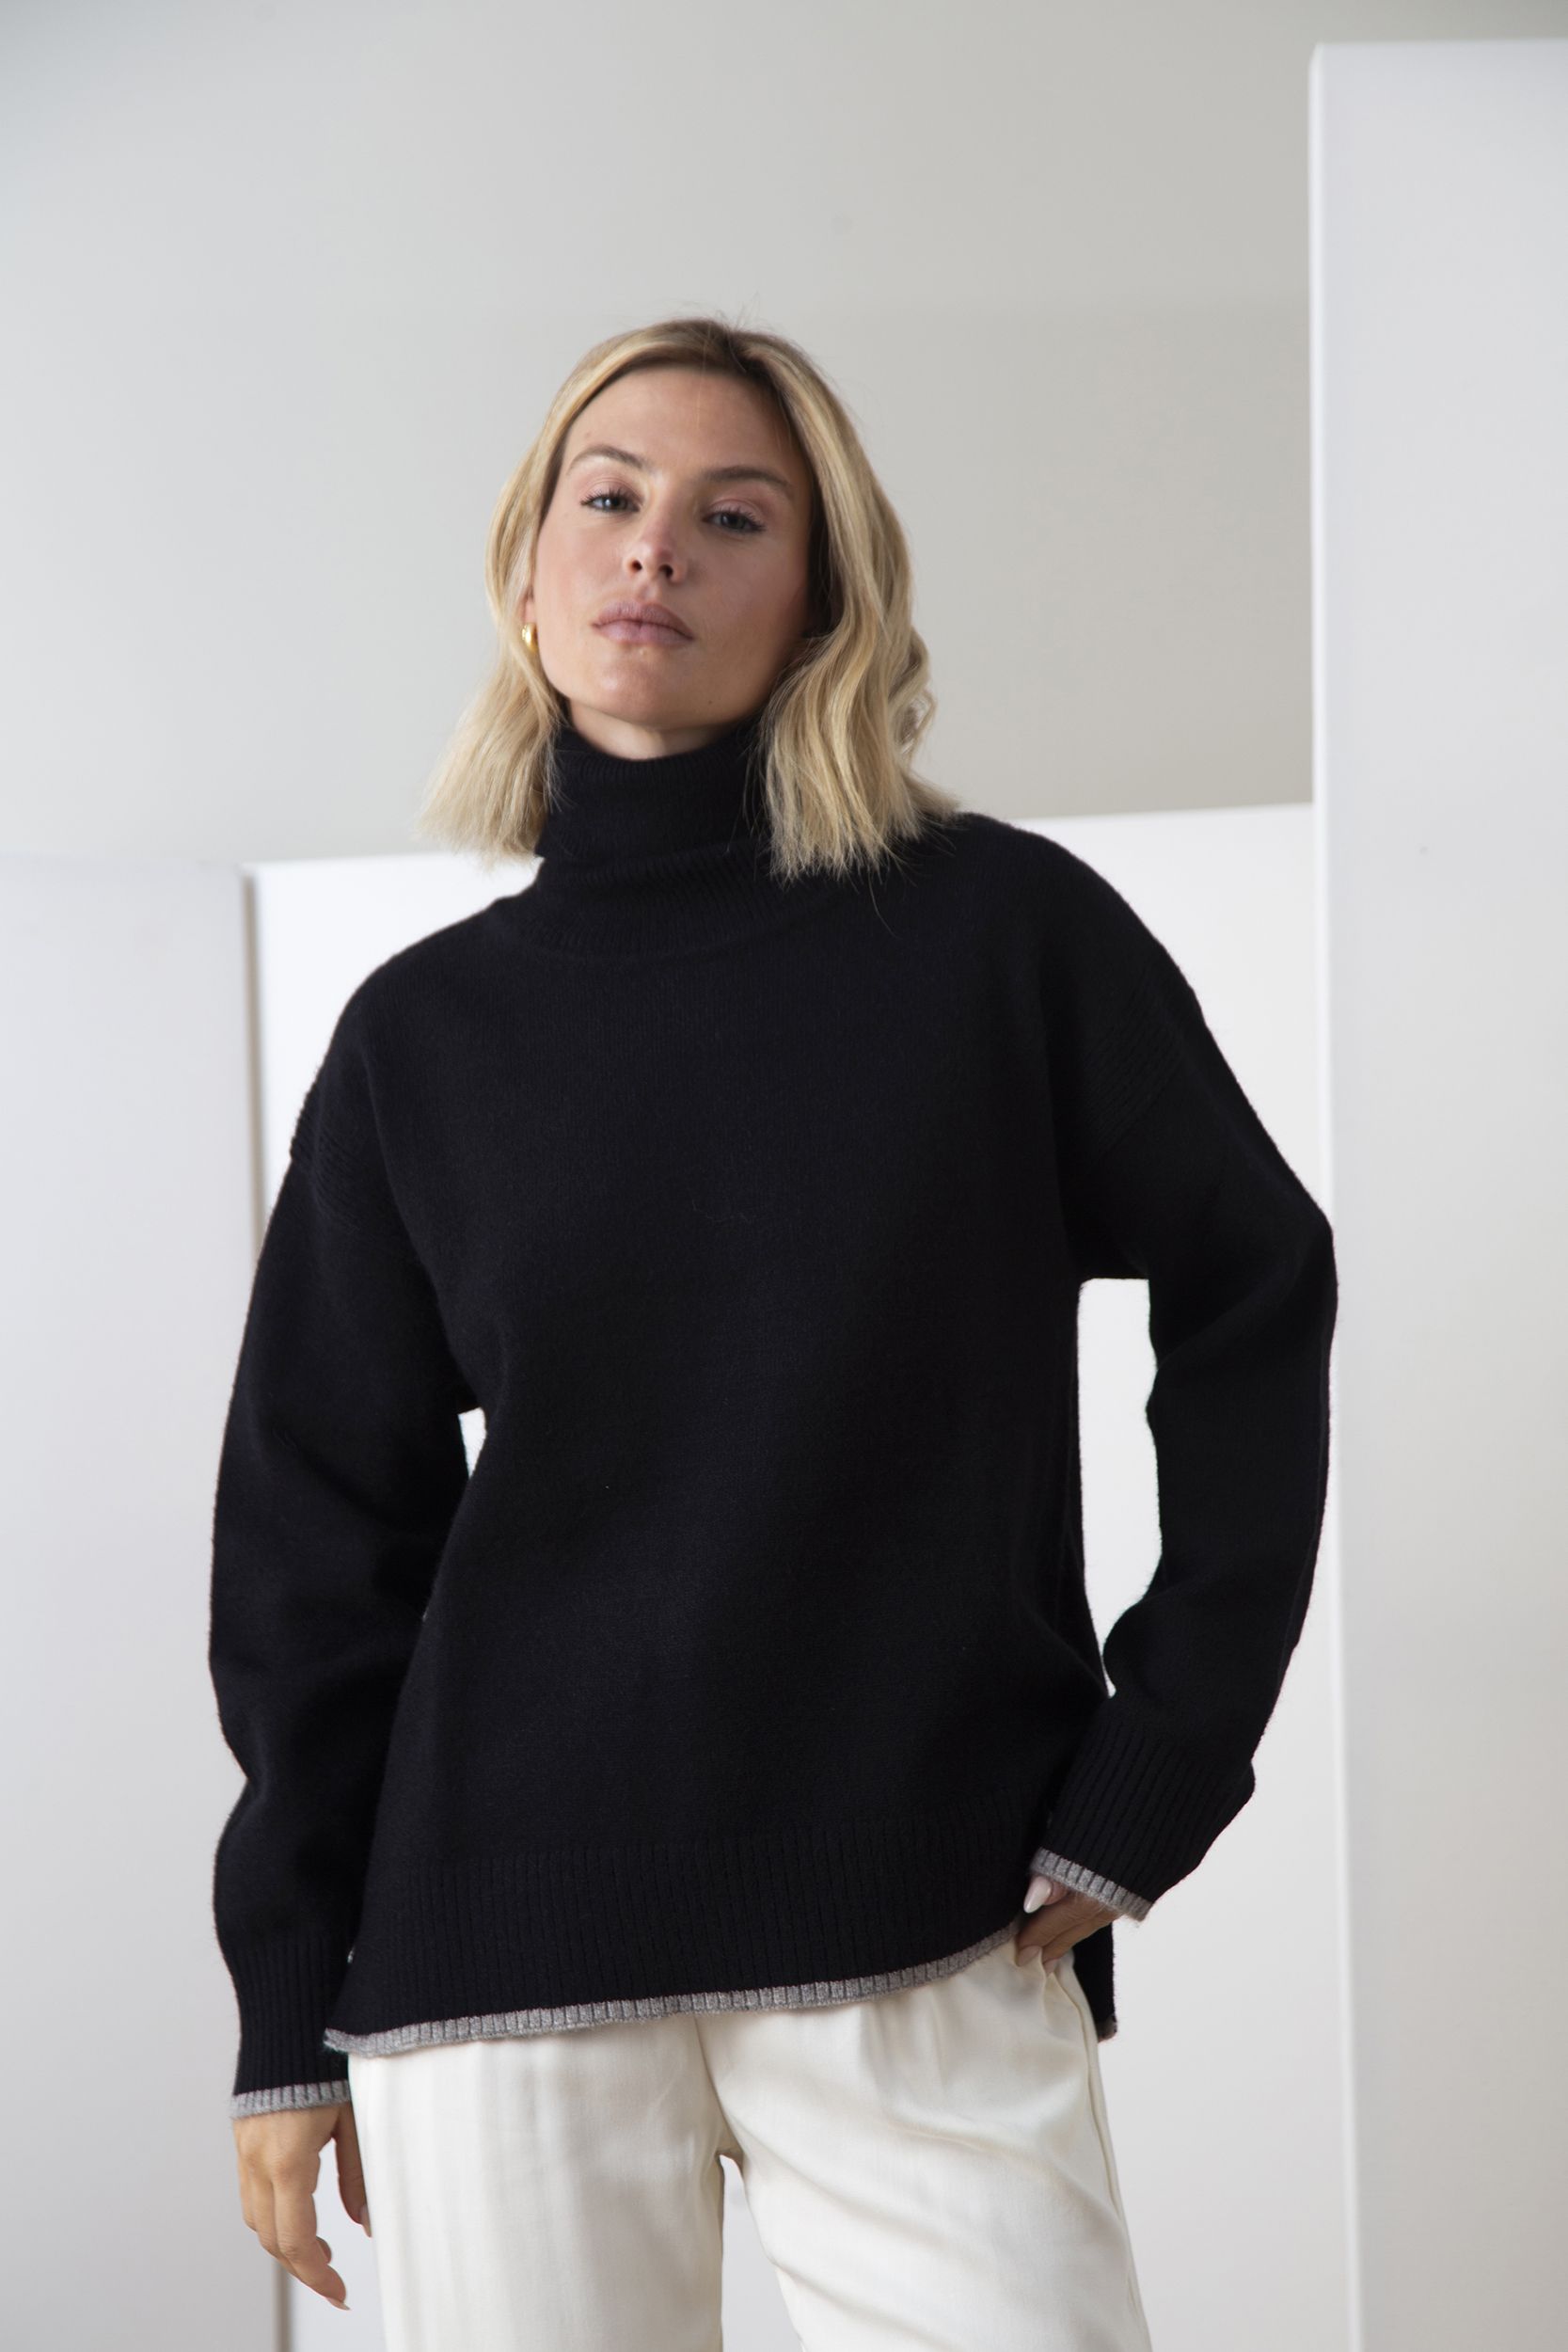 754-sweater-polera-alessandra-black-3.jpg